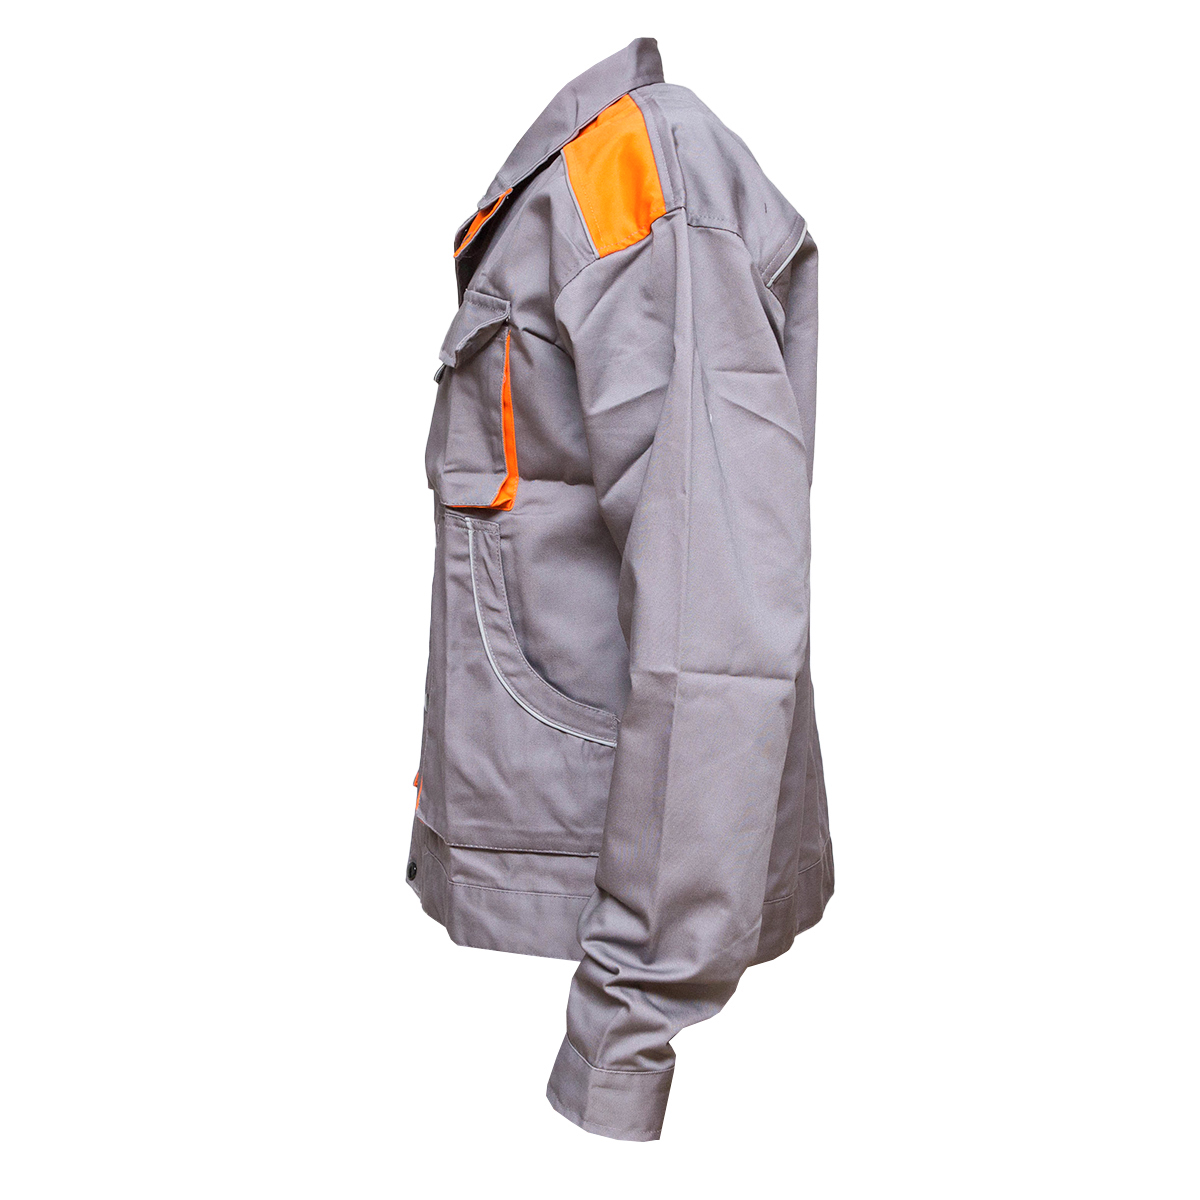 Jacheta de lucru poliester cu bumbac, gri/portocaliu marimea 60, 235g/m2 Breckner Germany